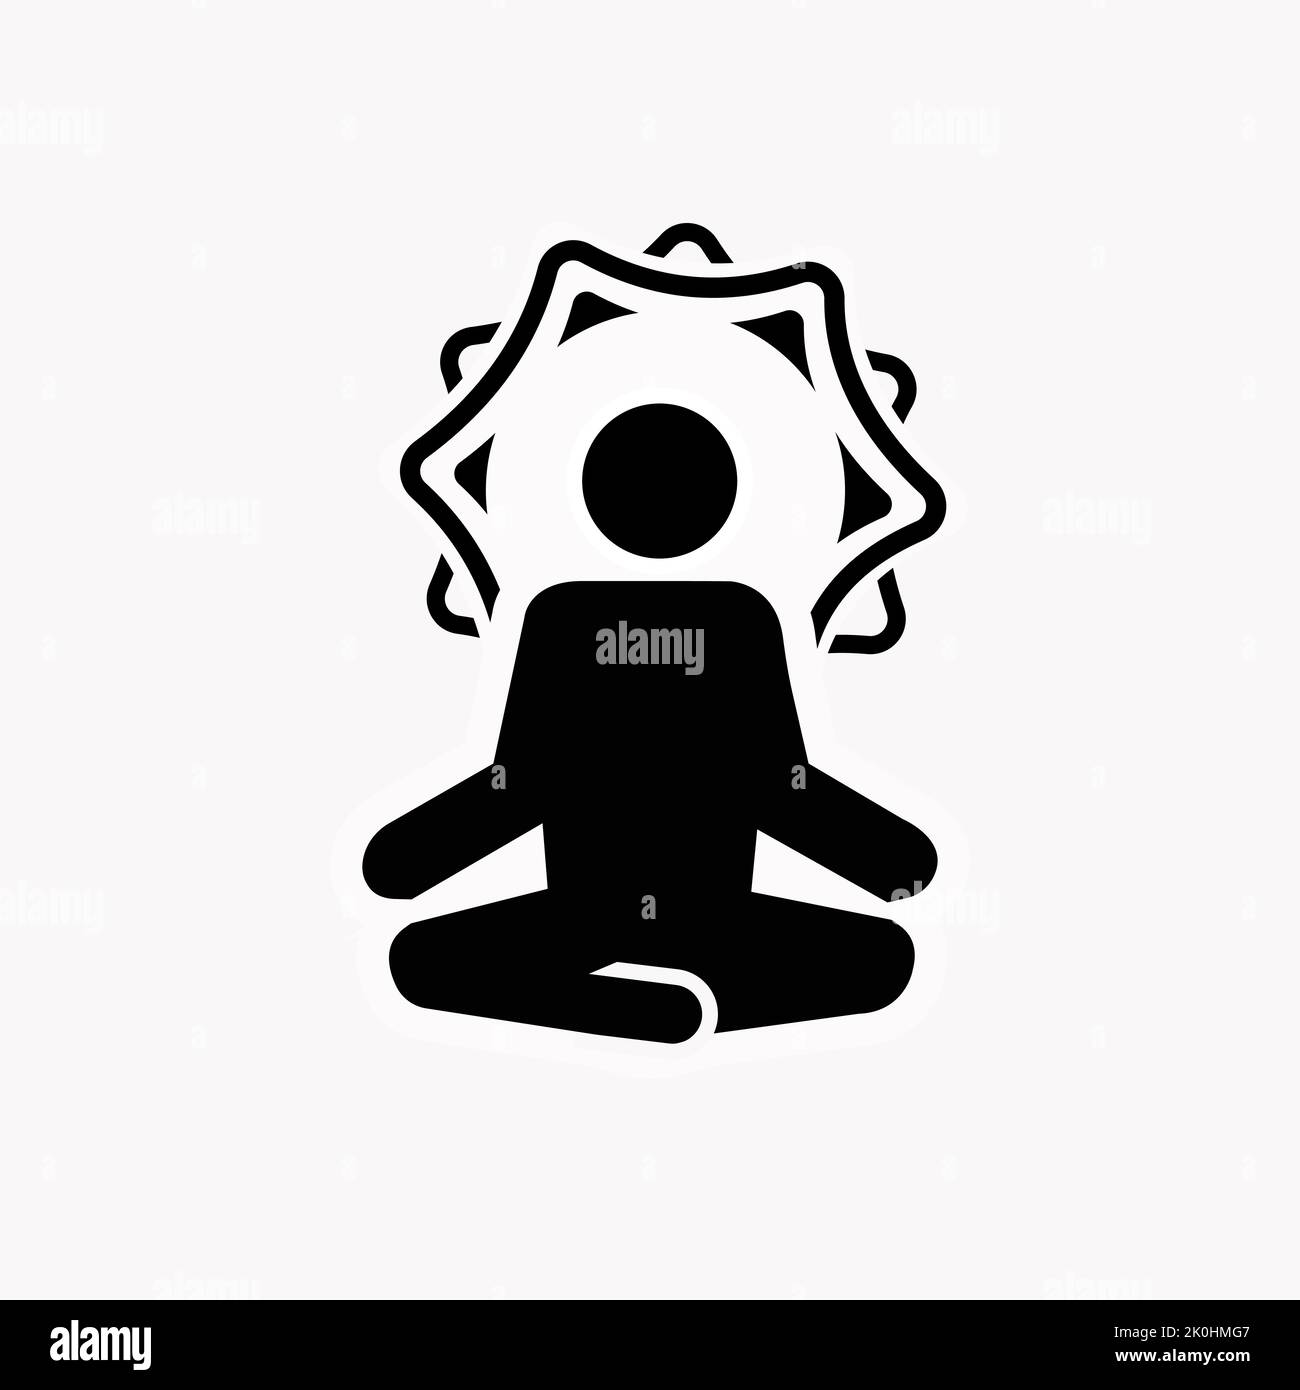 Yoga Retreat and Meditation Icon set. Flat Design Yoga Poses with Mandala Ornament in Back. Isolated Illustration. Stock Vector